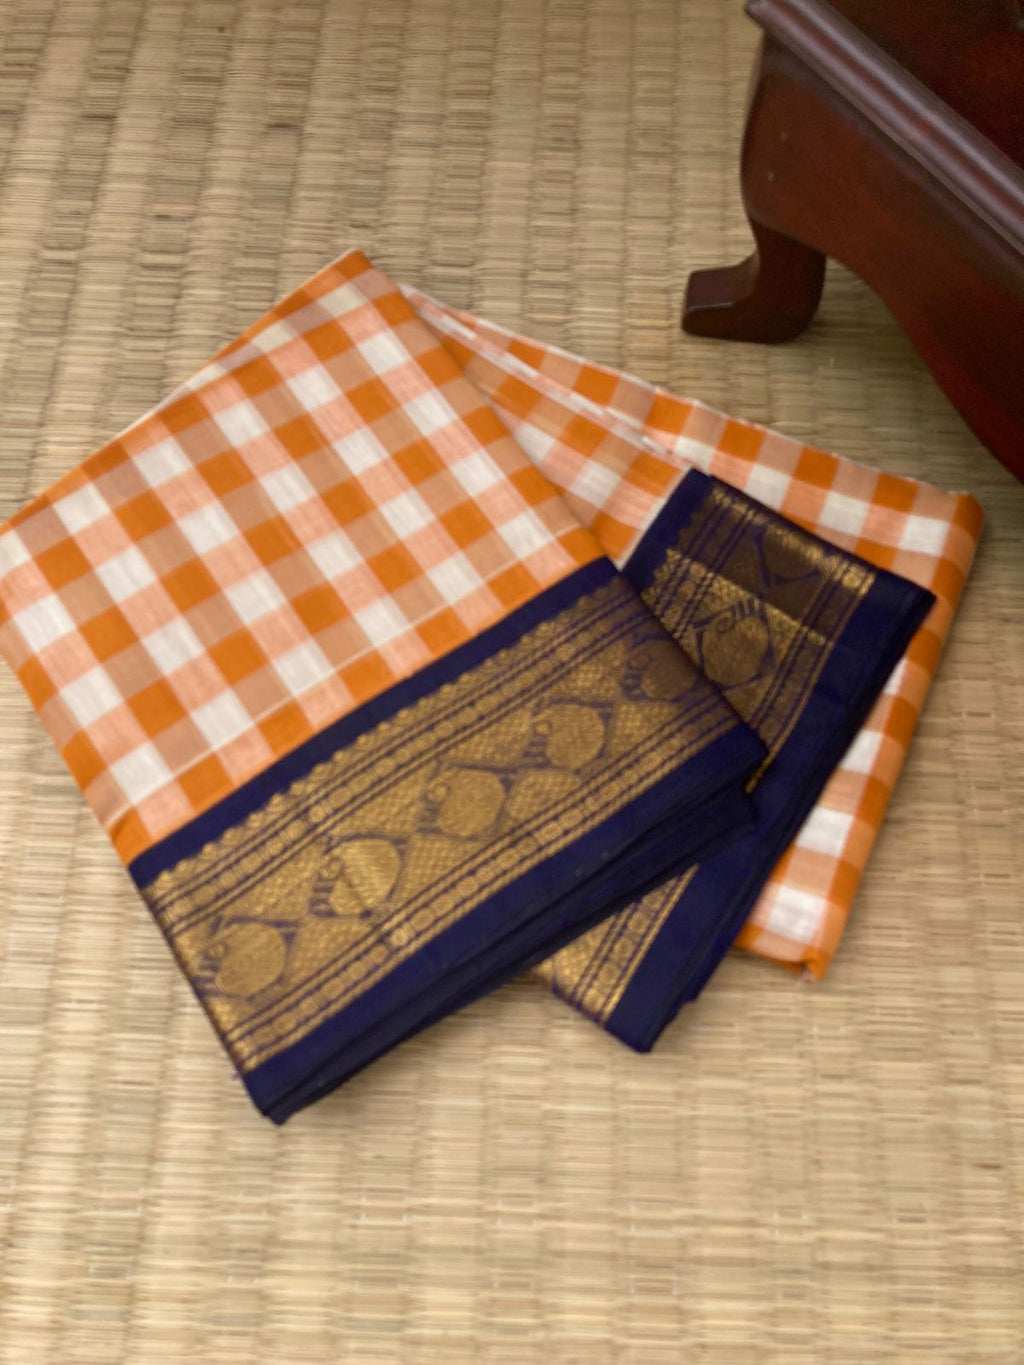 Paalum Palamum Kattams Korvai Silk Cottons - off white and orange with deep navy blue borders